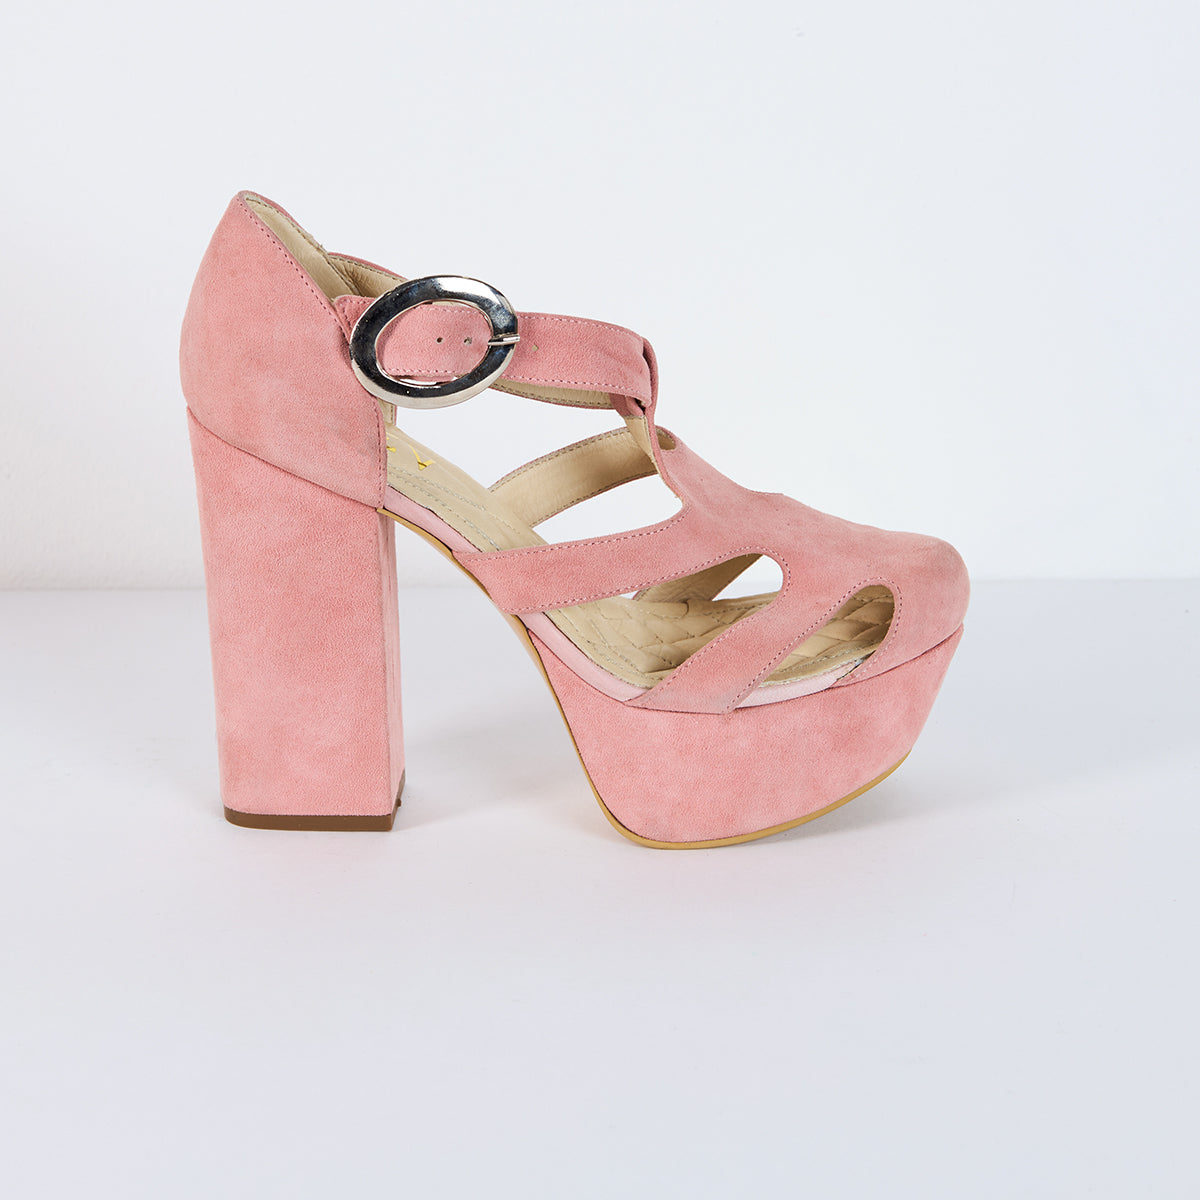 Cinnamon heels - Size 38